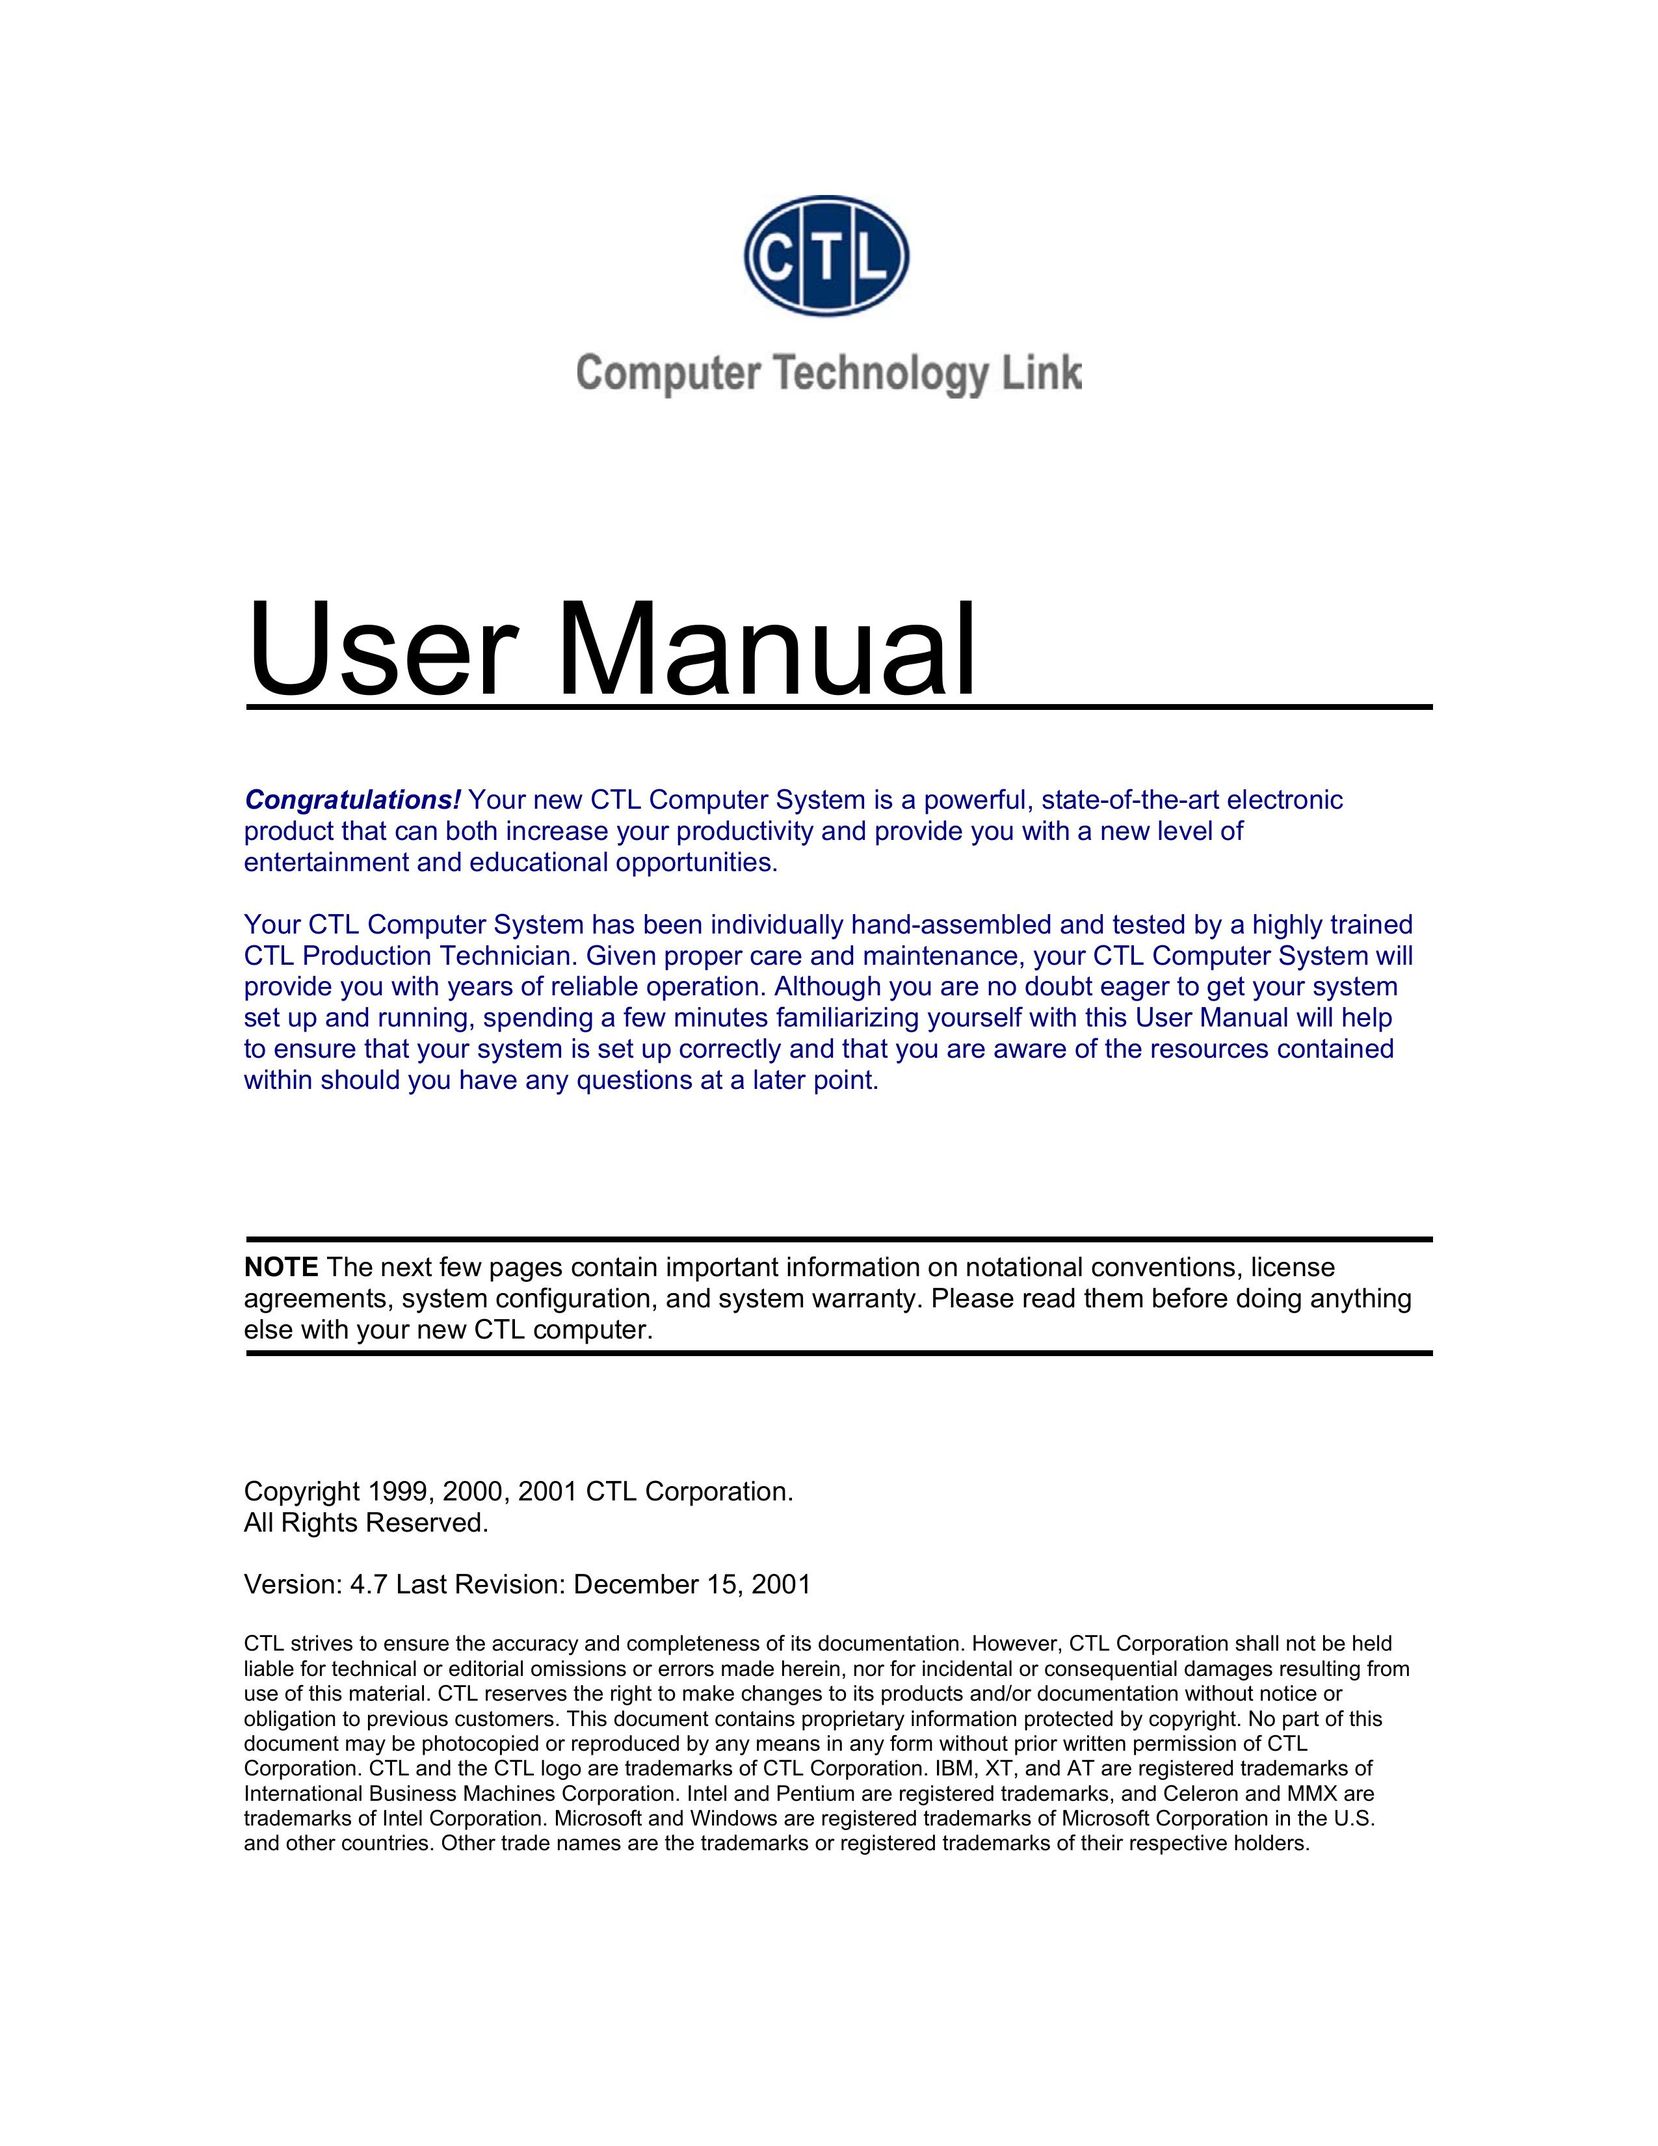 Computer Tech Link Vector Personal Computer User Manual